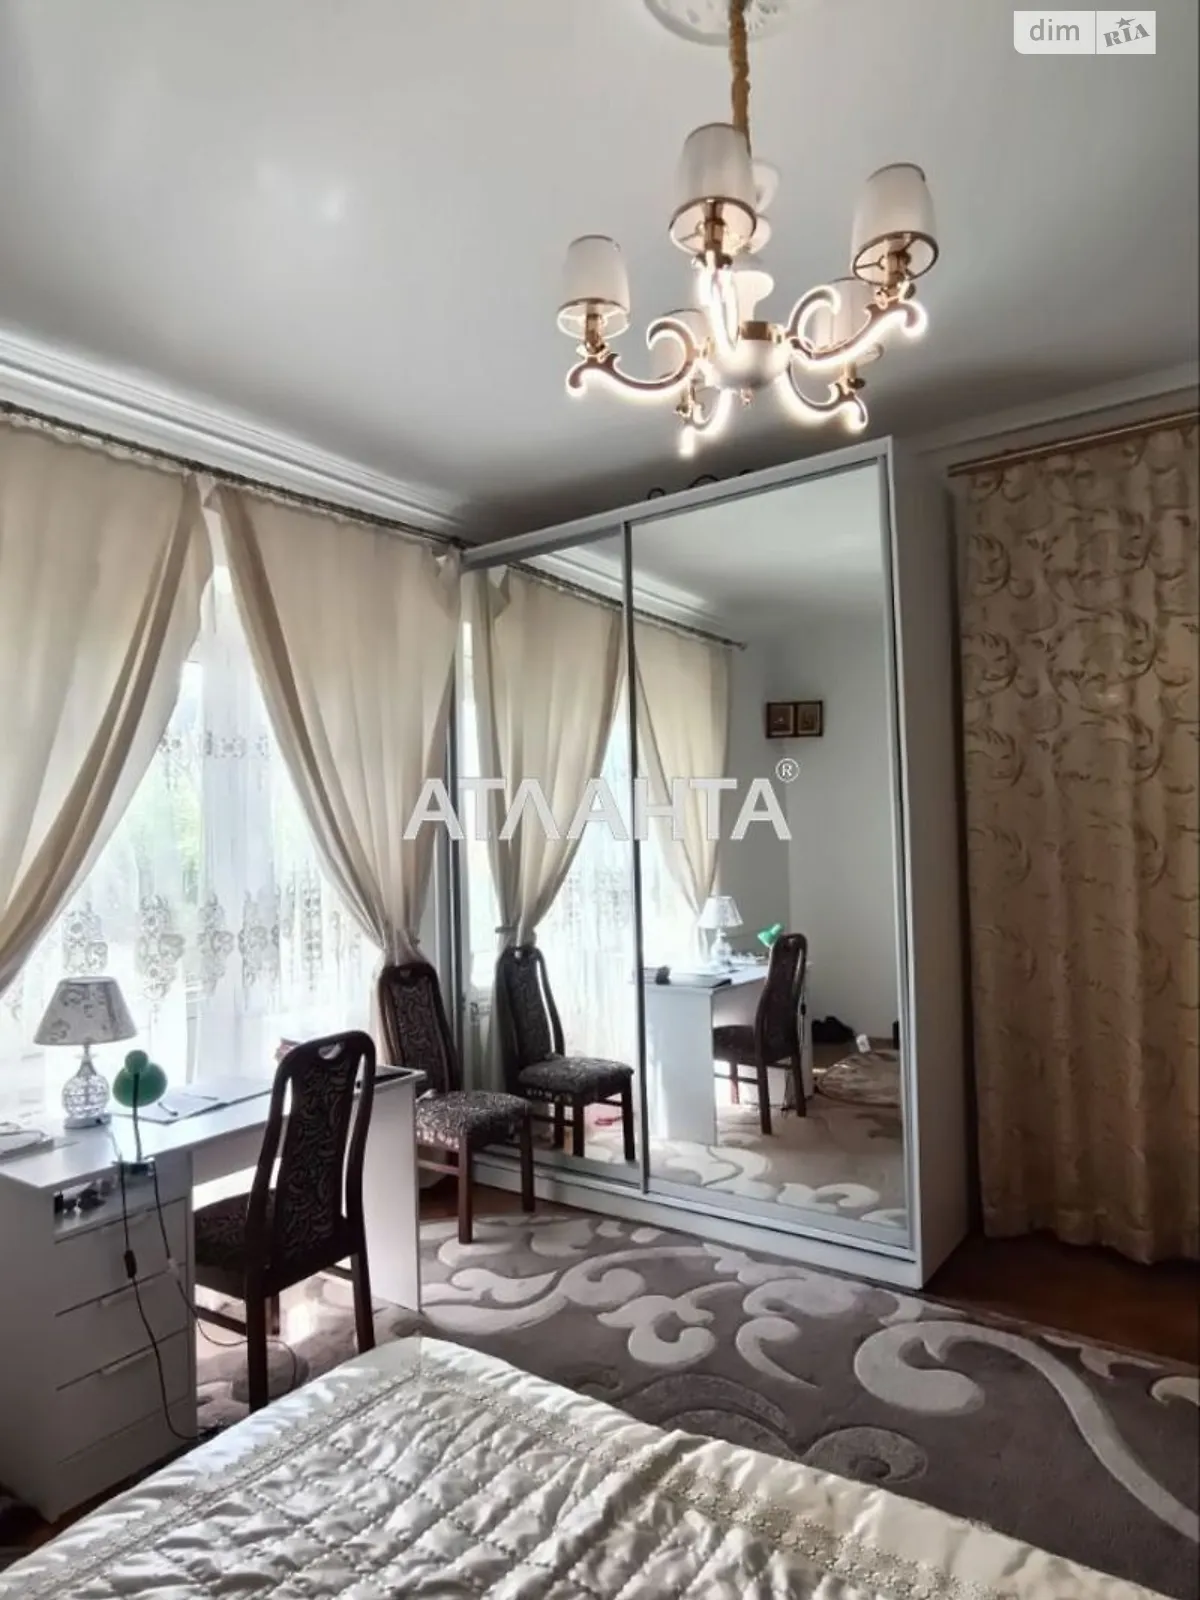 Продается комната 69.24 кв. м в Черновцах, цена: 75000 $ - фото 1